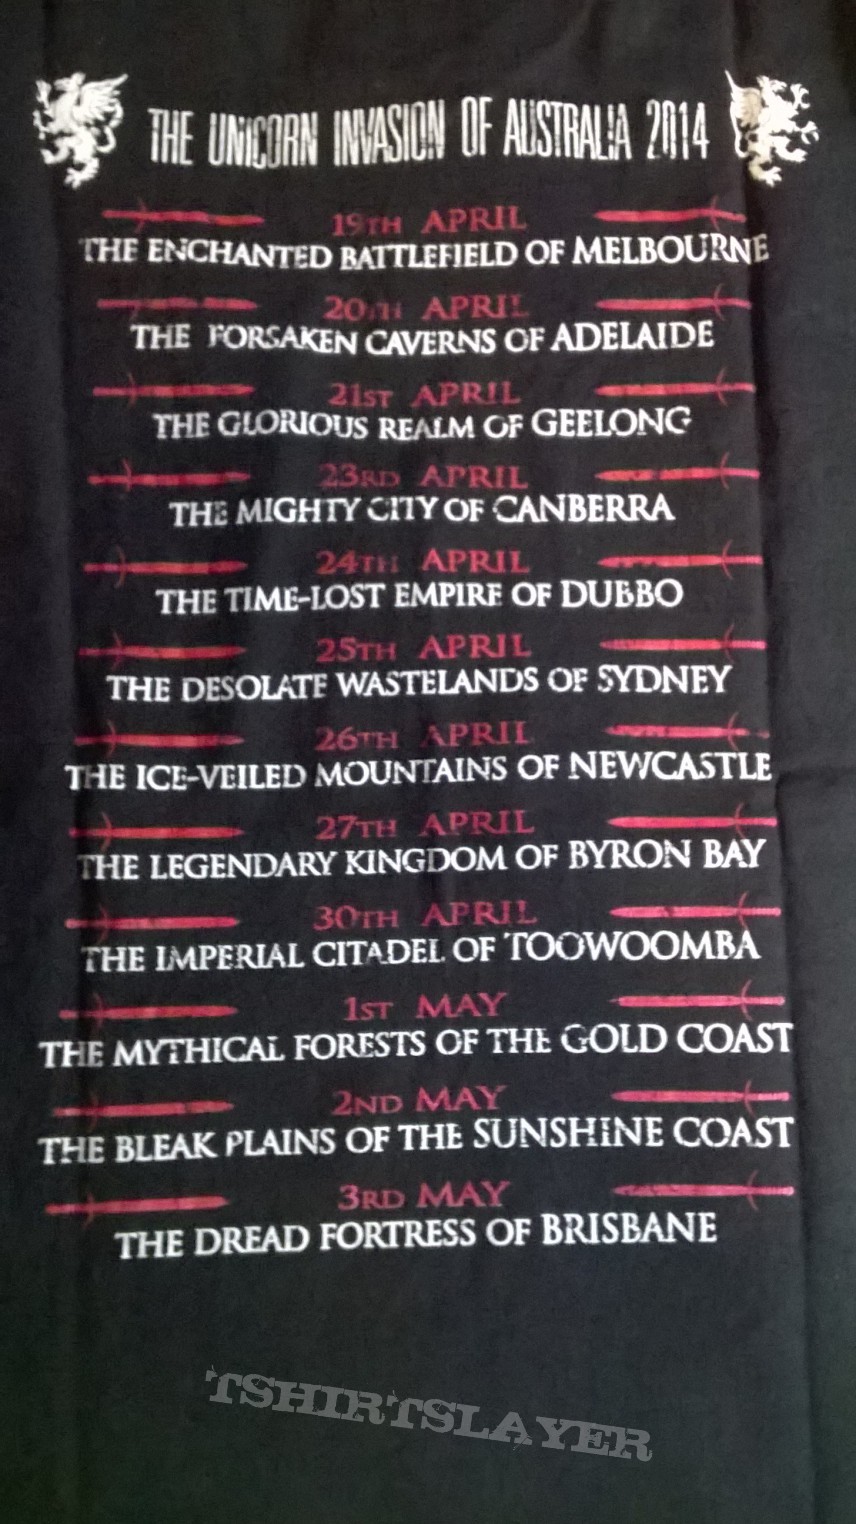 Gloryhammer - The Unicorn Invasion of Australia 2014 Tour